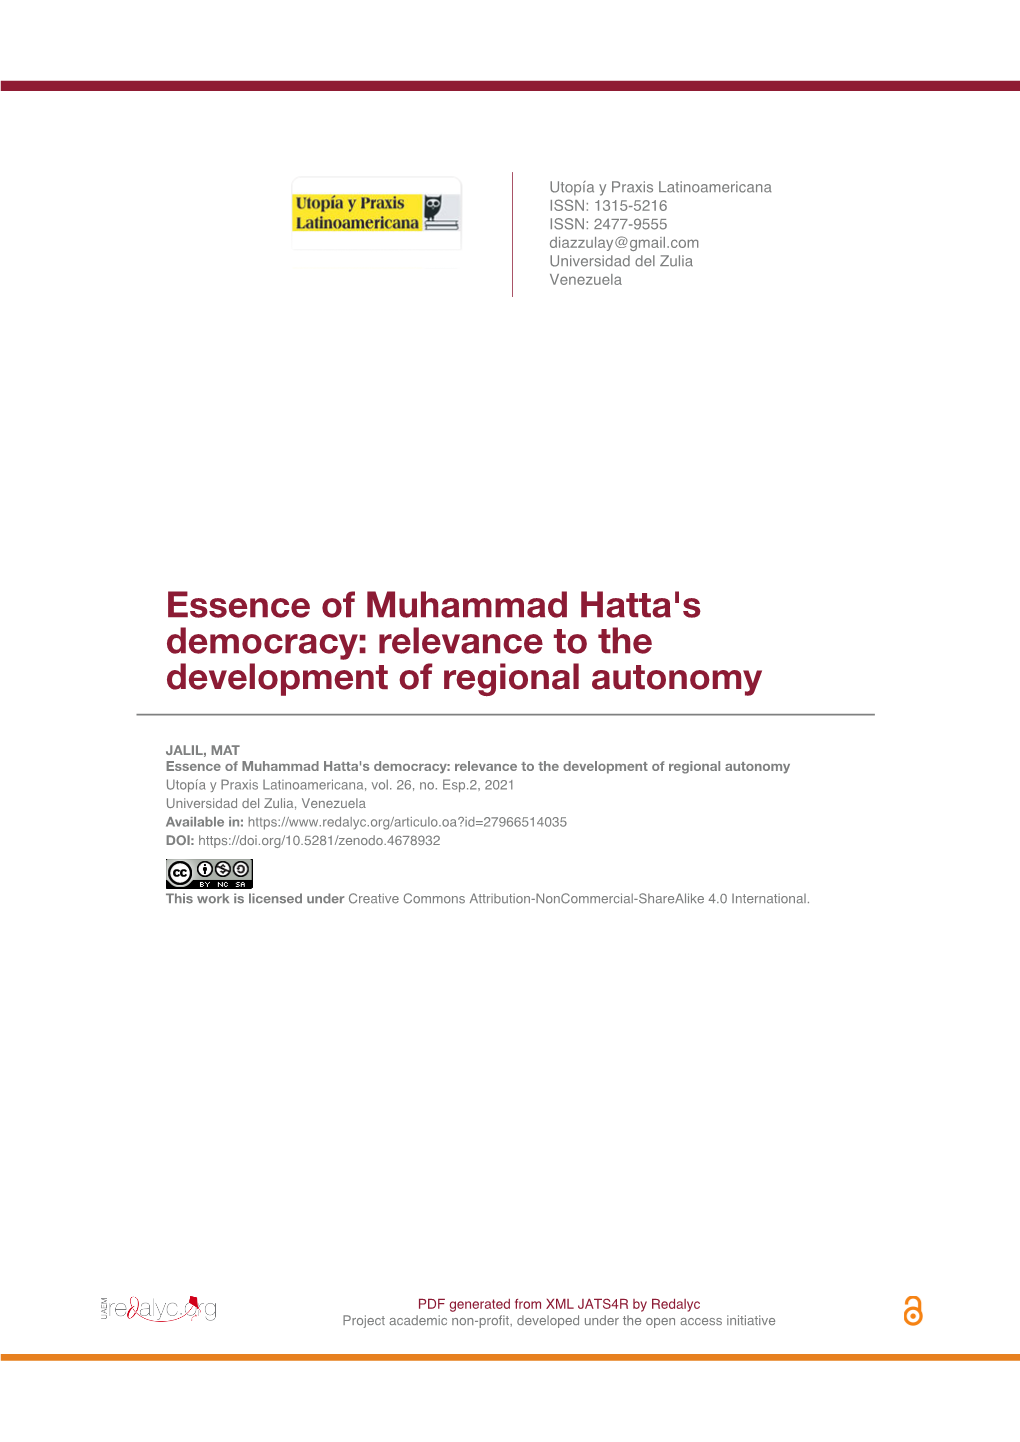 Essence of Muhammad Hatta's Democracy: Relevance to the Development of Regional Autonomy